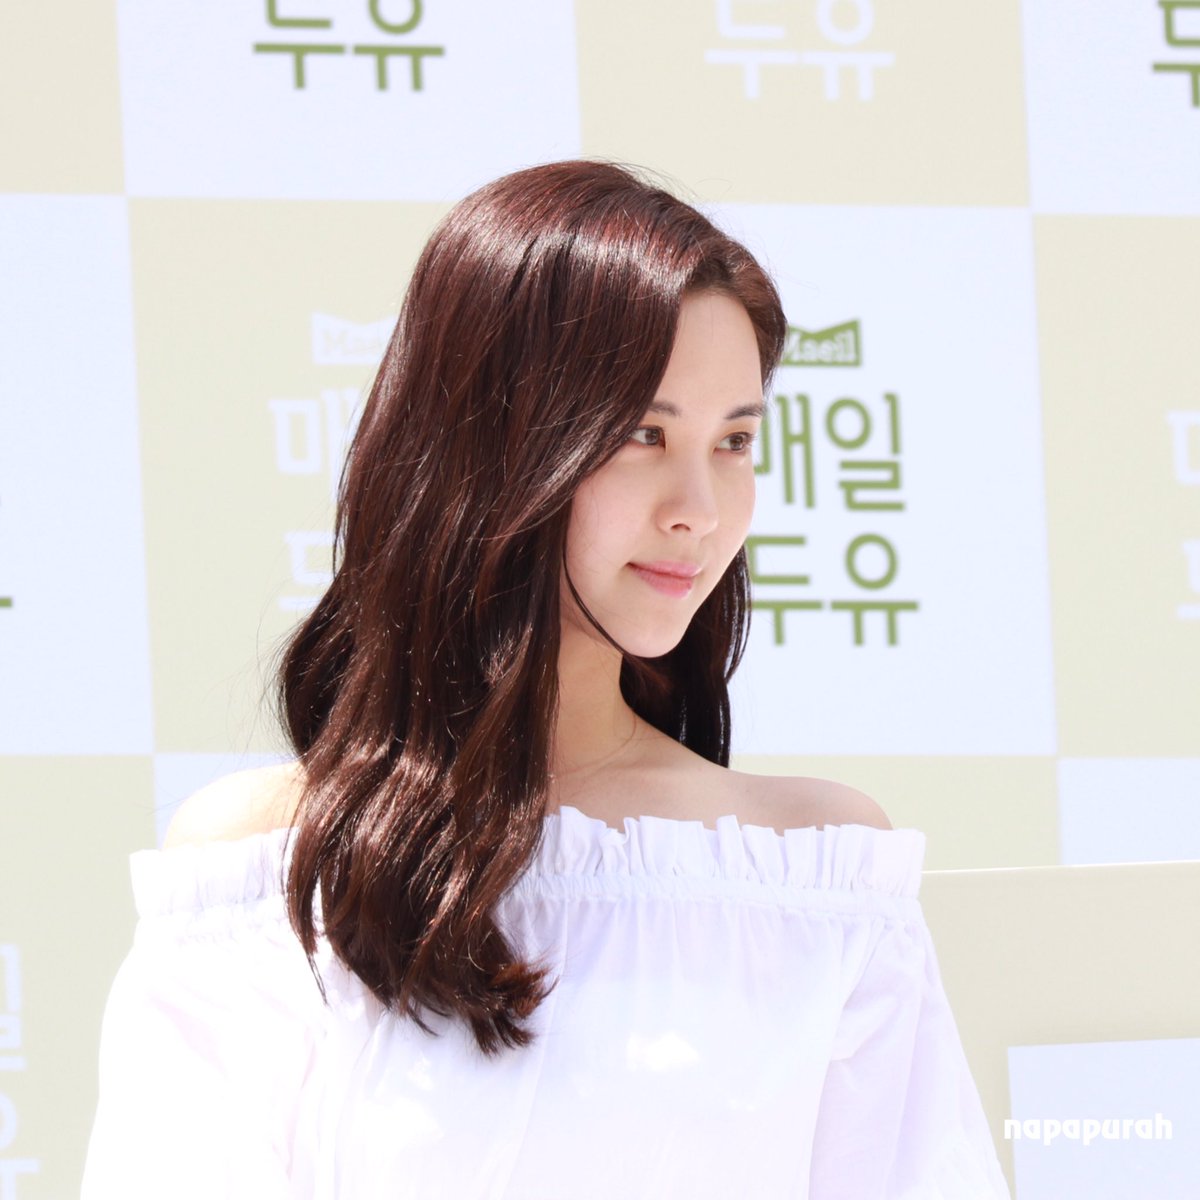  [PIC][03-06-2017]SeoHyun tham dự sự kiện “City Forestival - Maeil Duyou 'Confidence Diary'” vào chiều nay - Page 3 DBpDNwDVYAARred